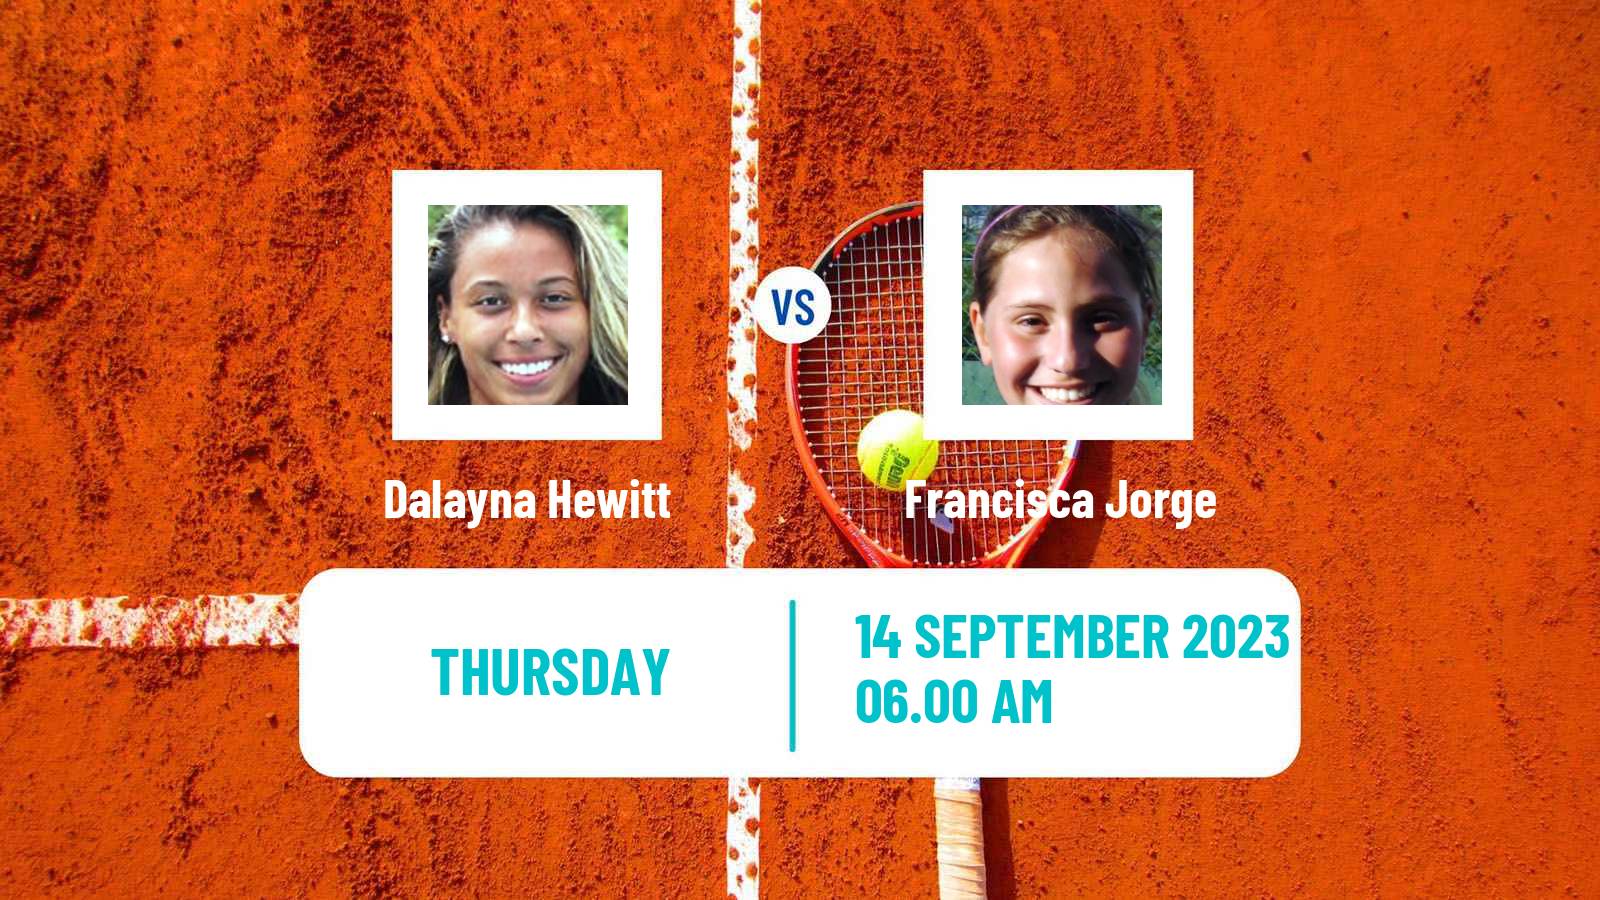 Tennis ITF W25 Leiria Women Dalayna Hewitt - Francisca Jorge